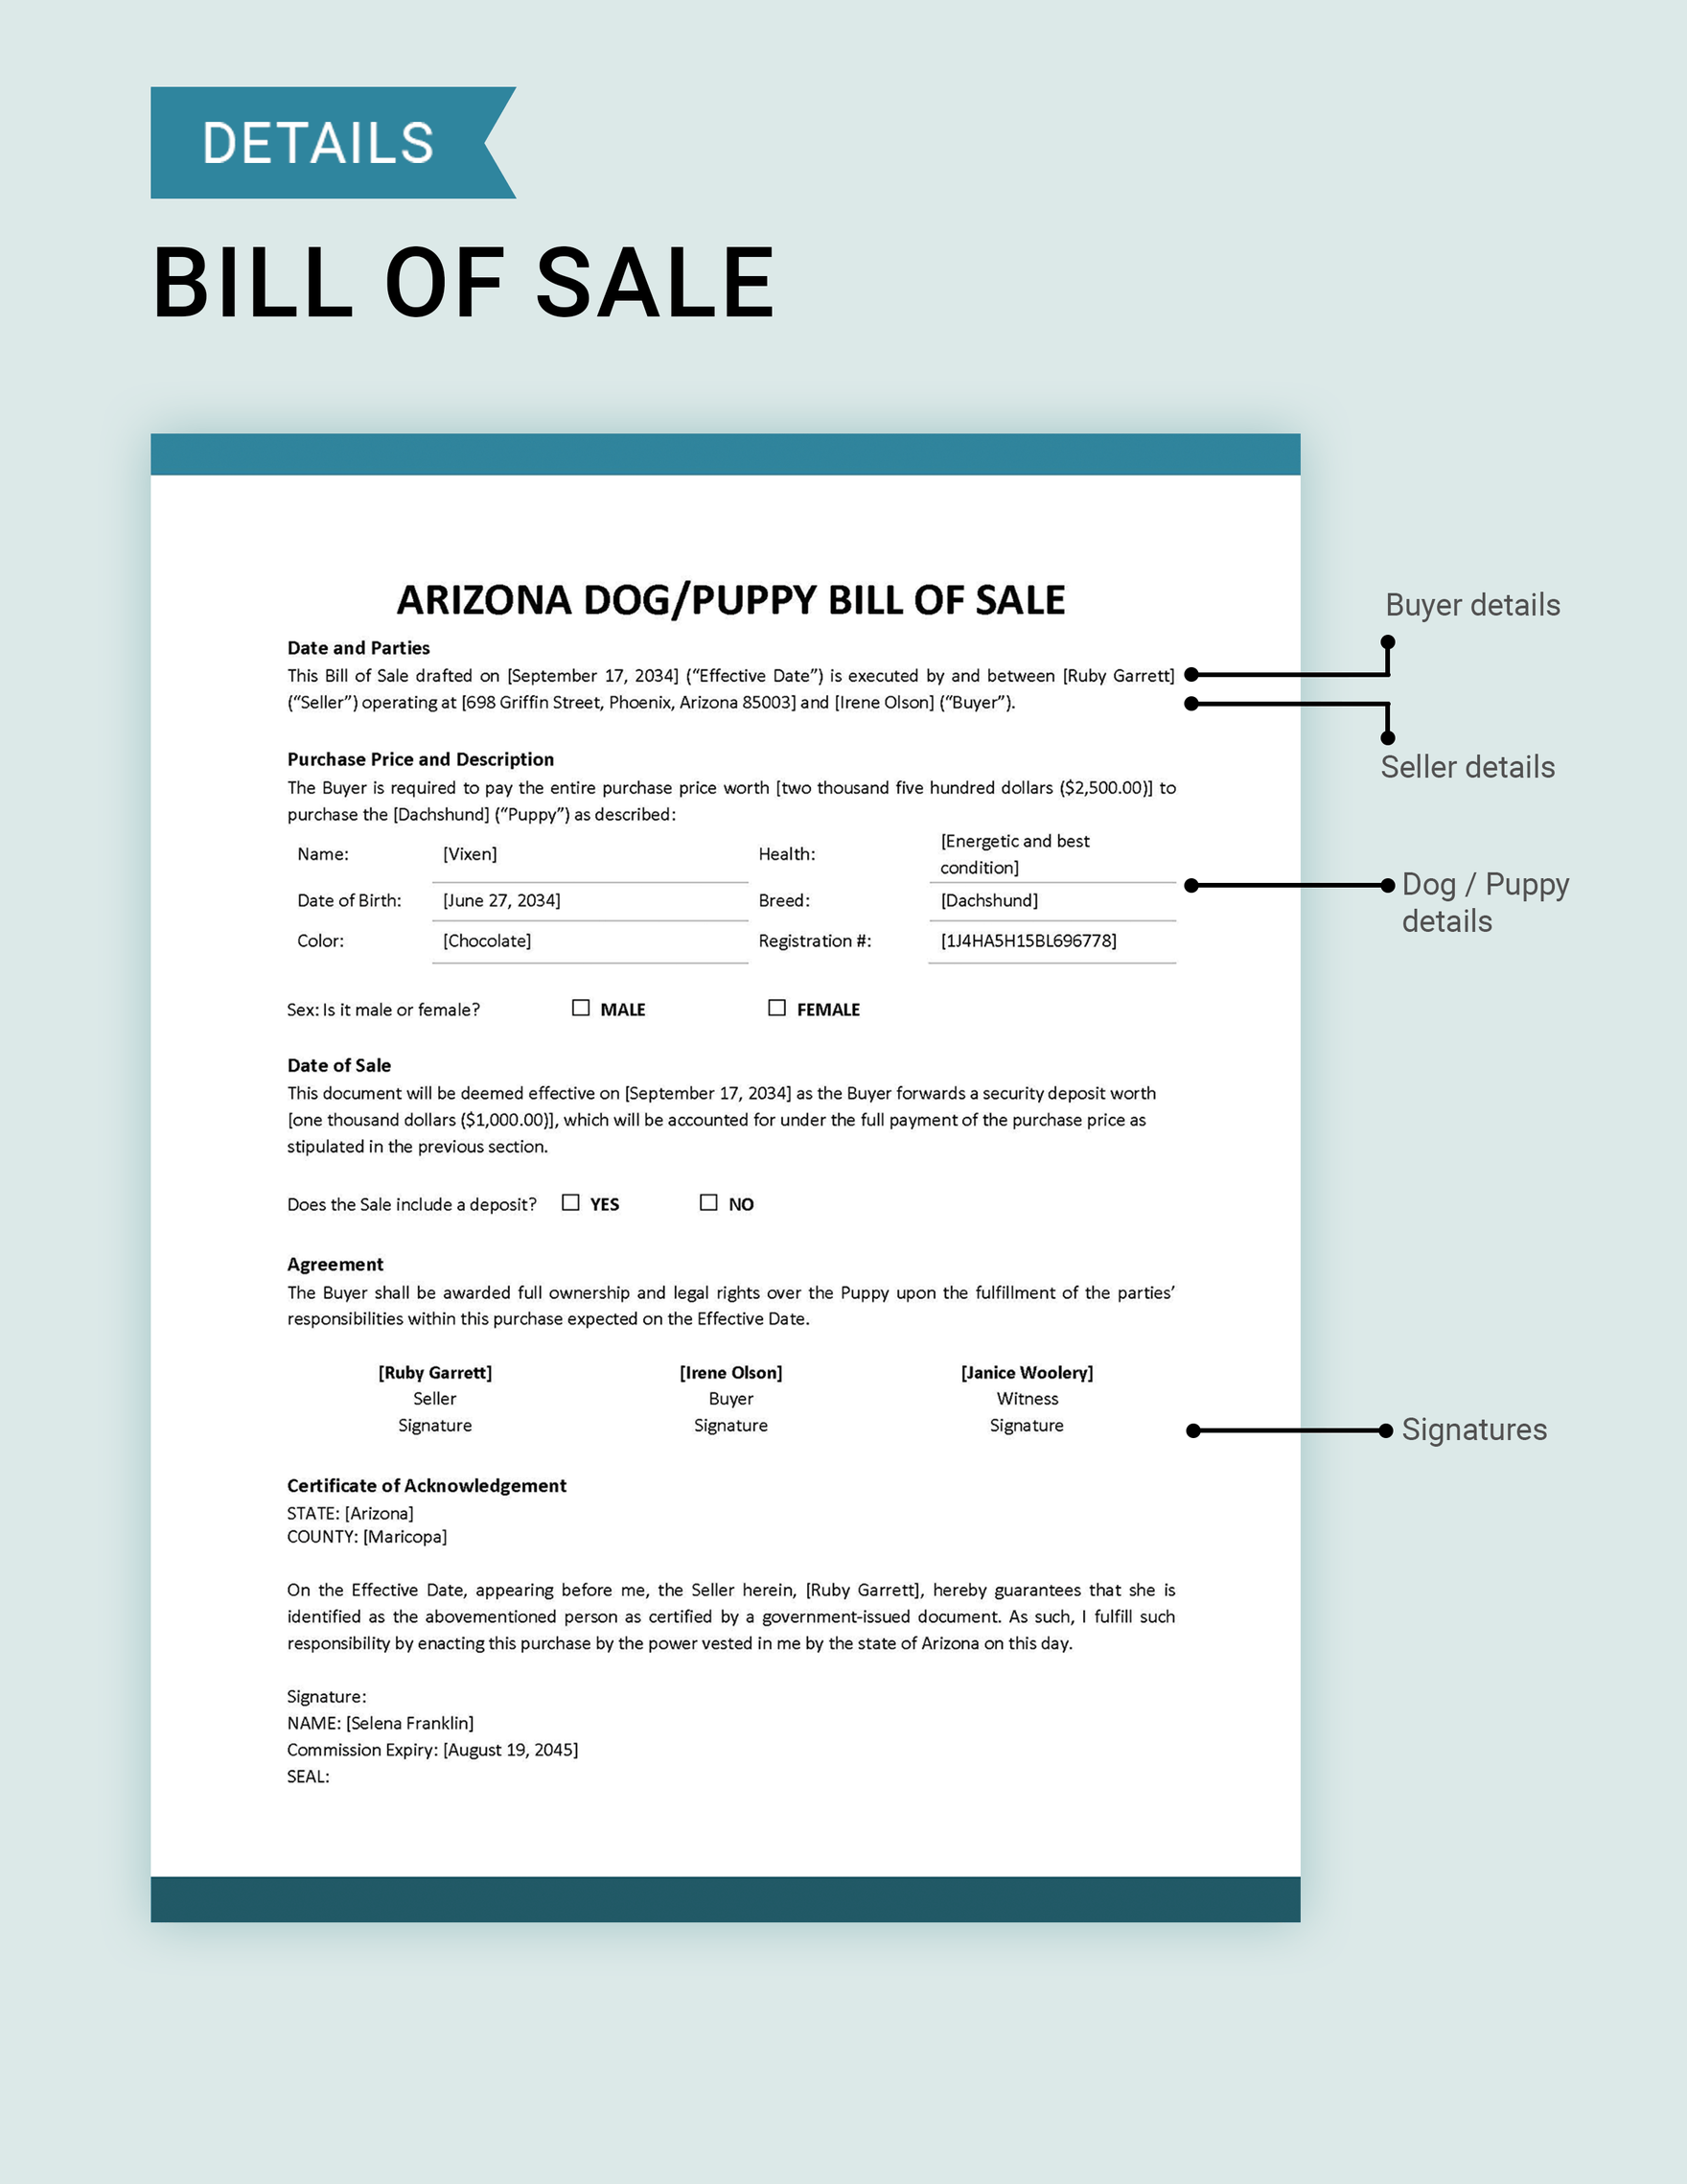 Arizona Dog / Puppy Bill of Sale Template